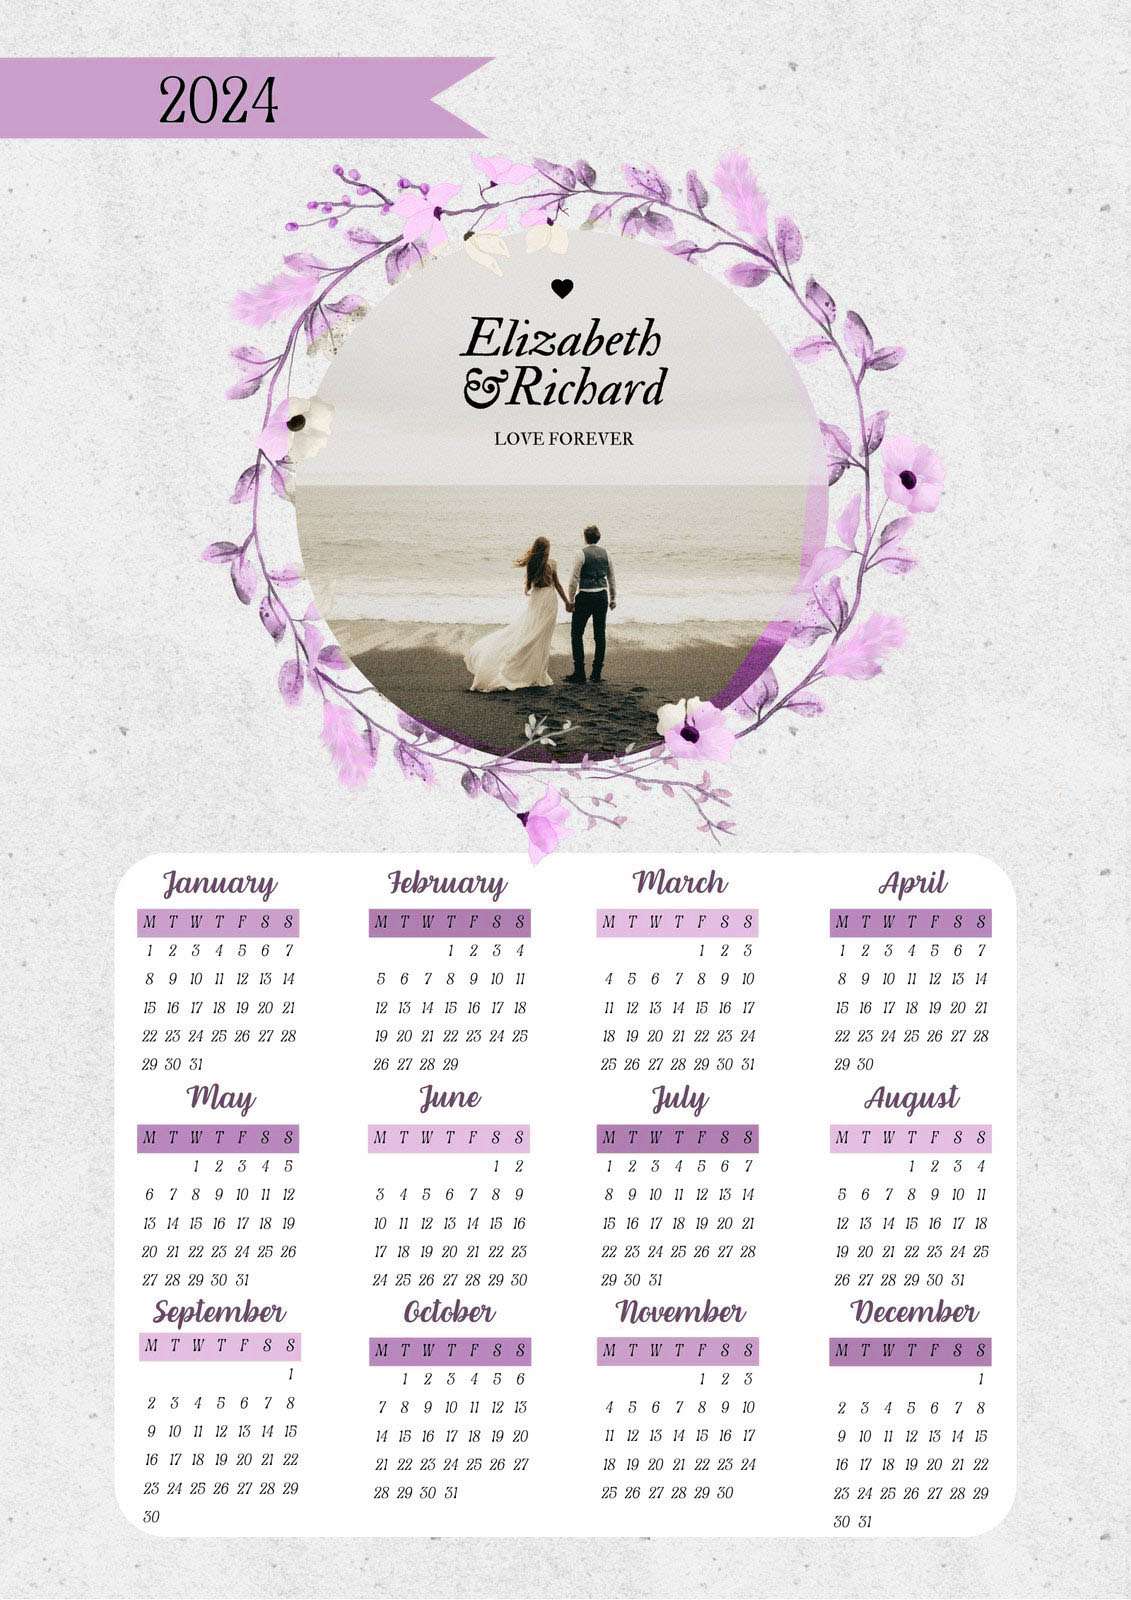 2024 Calendar My Annual Plans